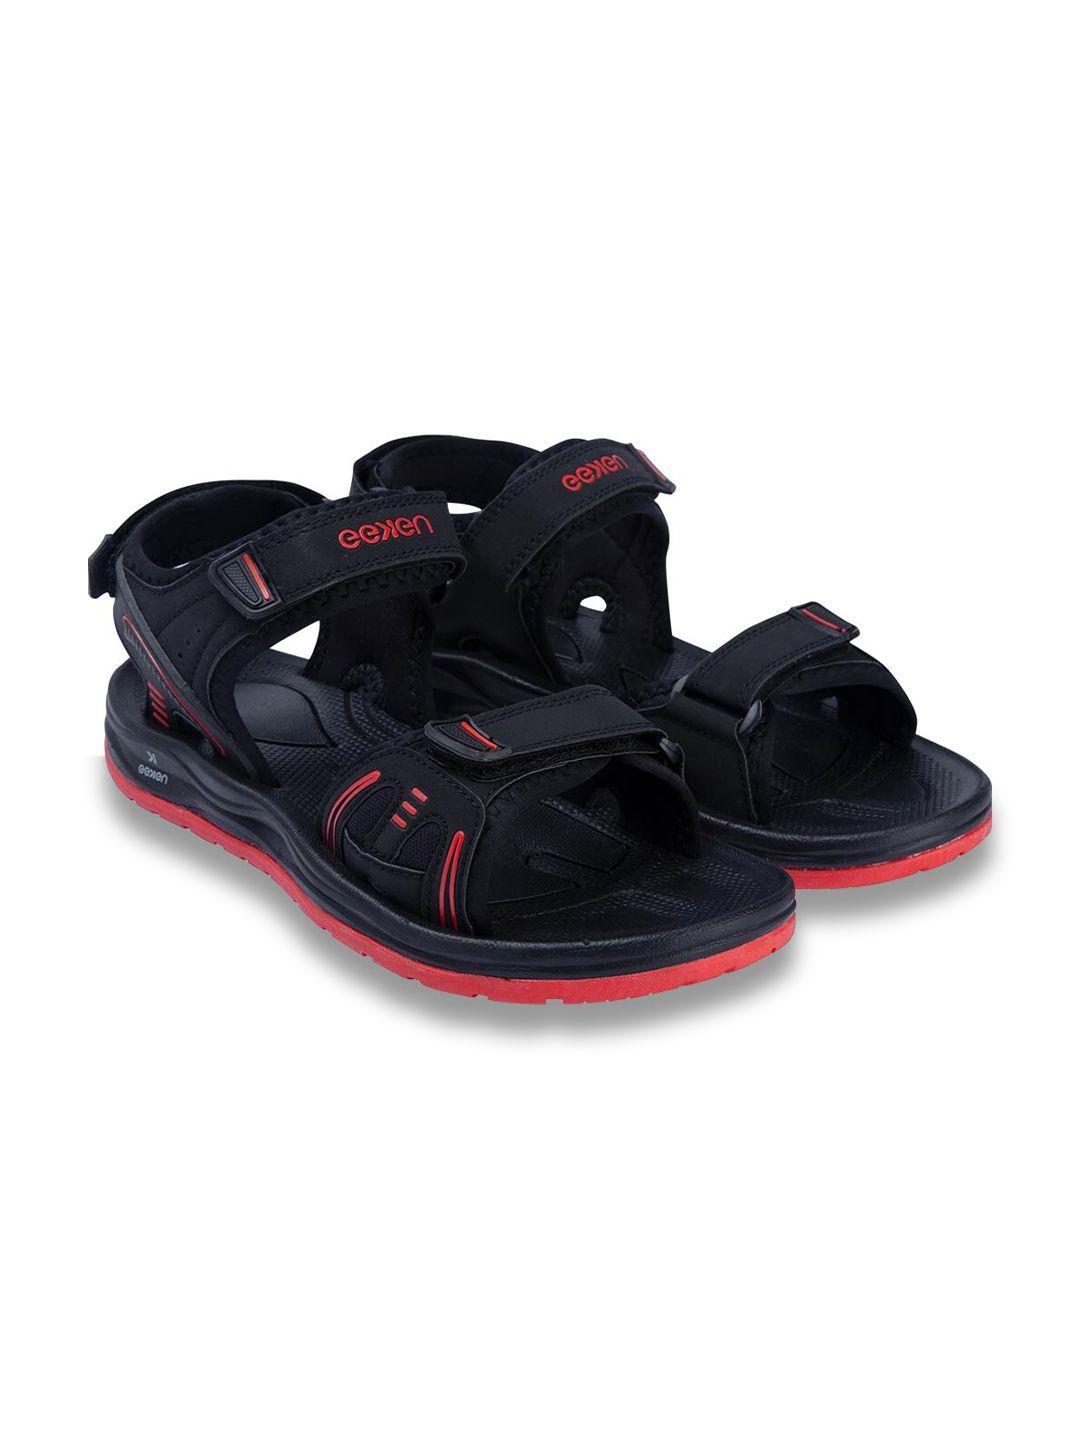 paragon men comfort sports sandals